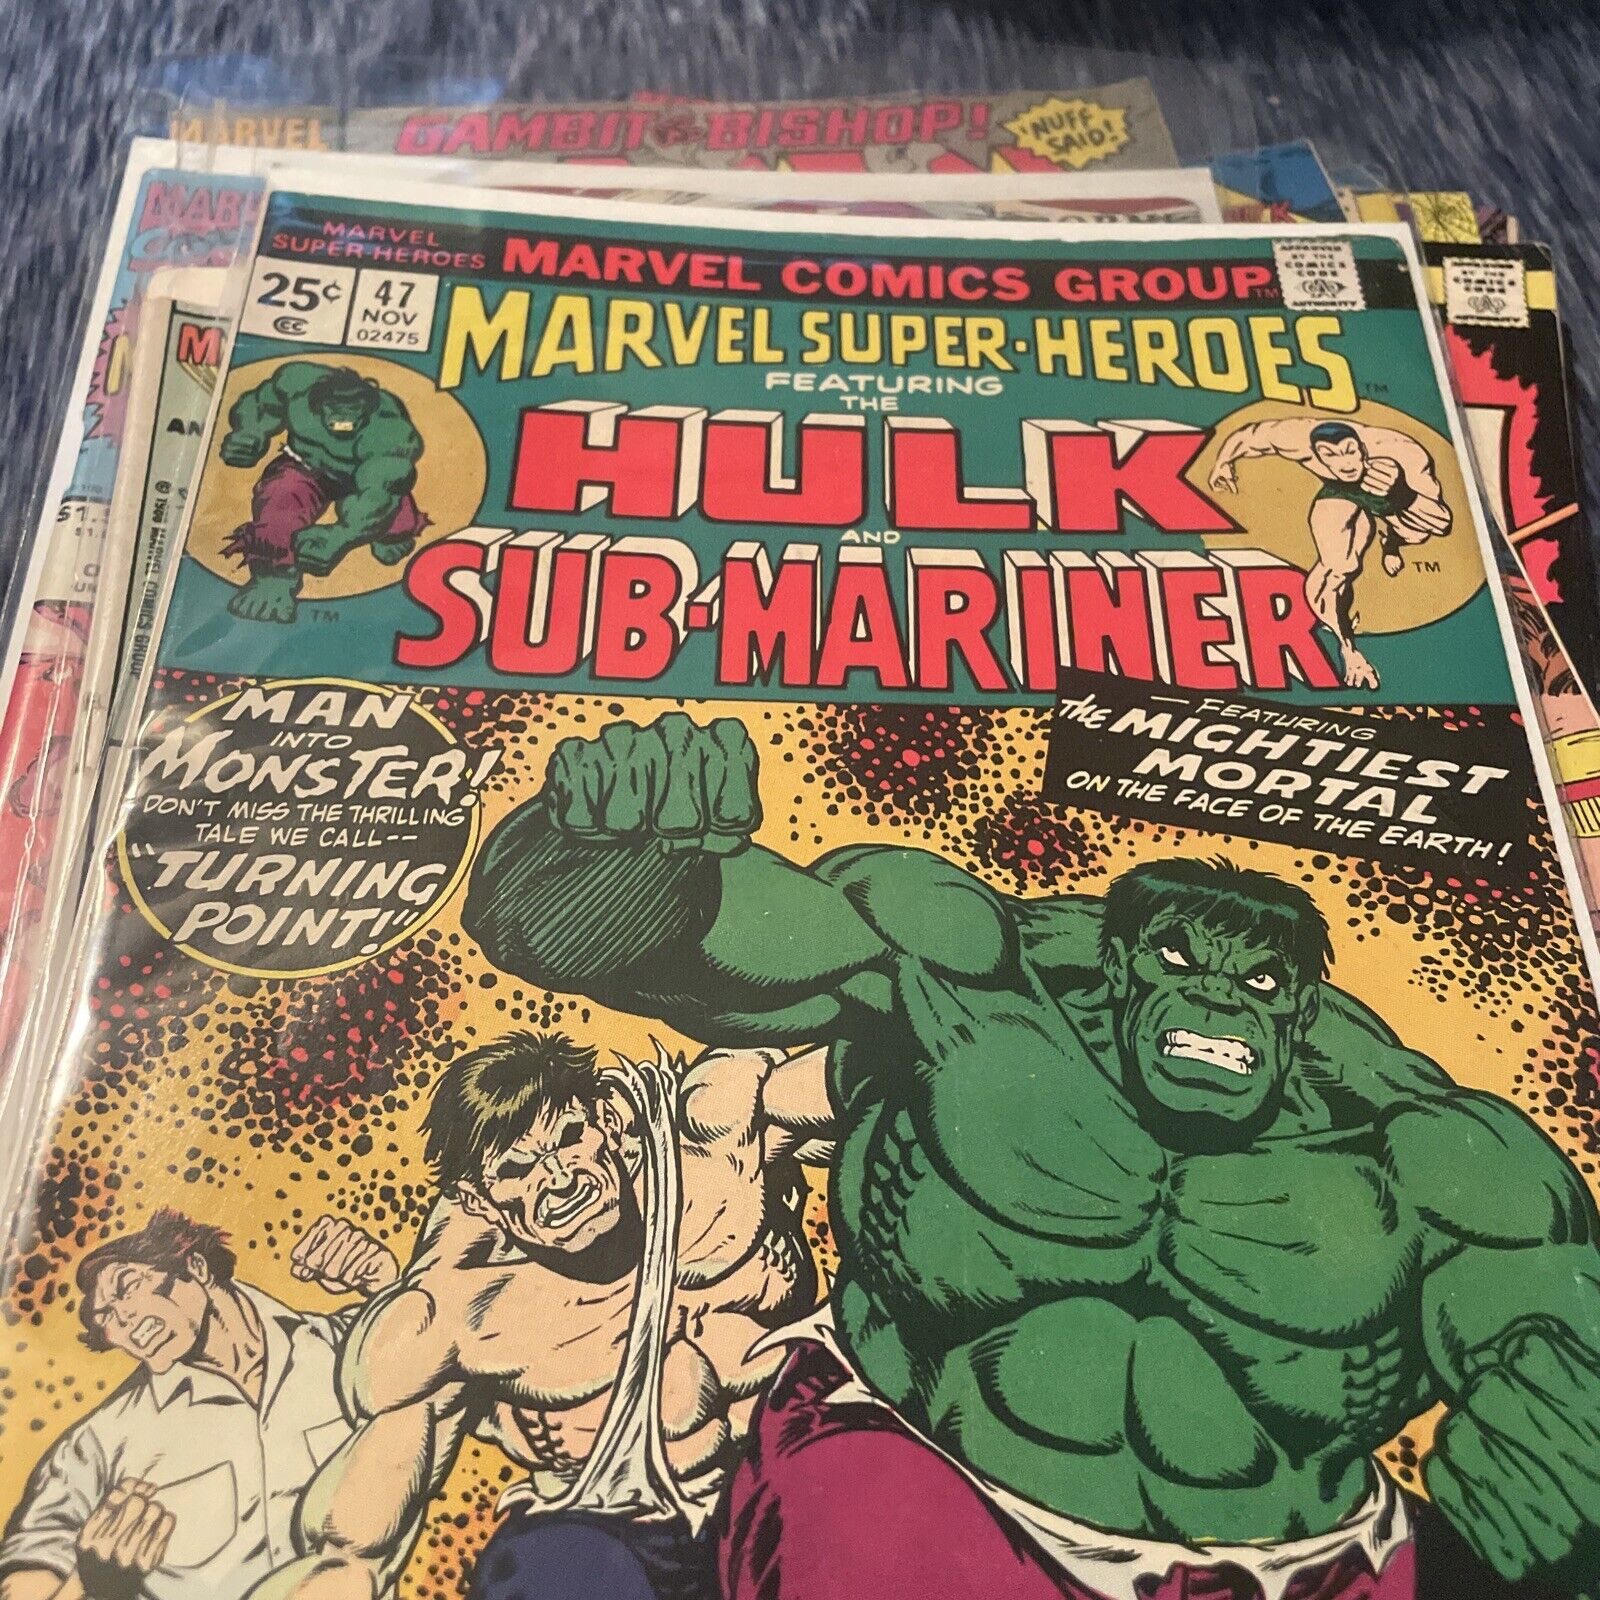 Marvel Super-Heroes #47 (Marvel Comics November 1974)